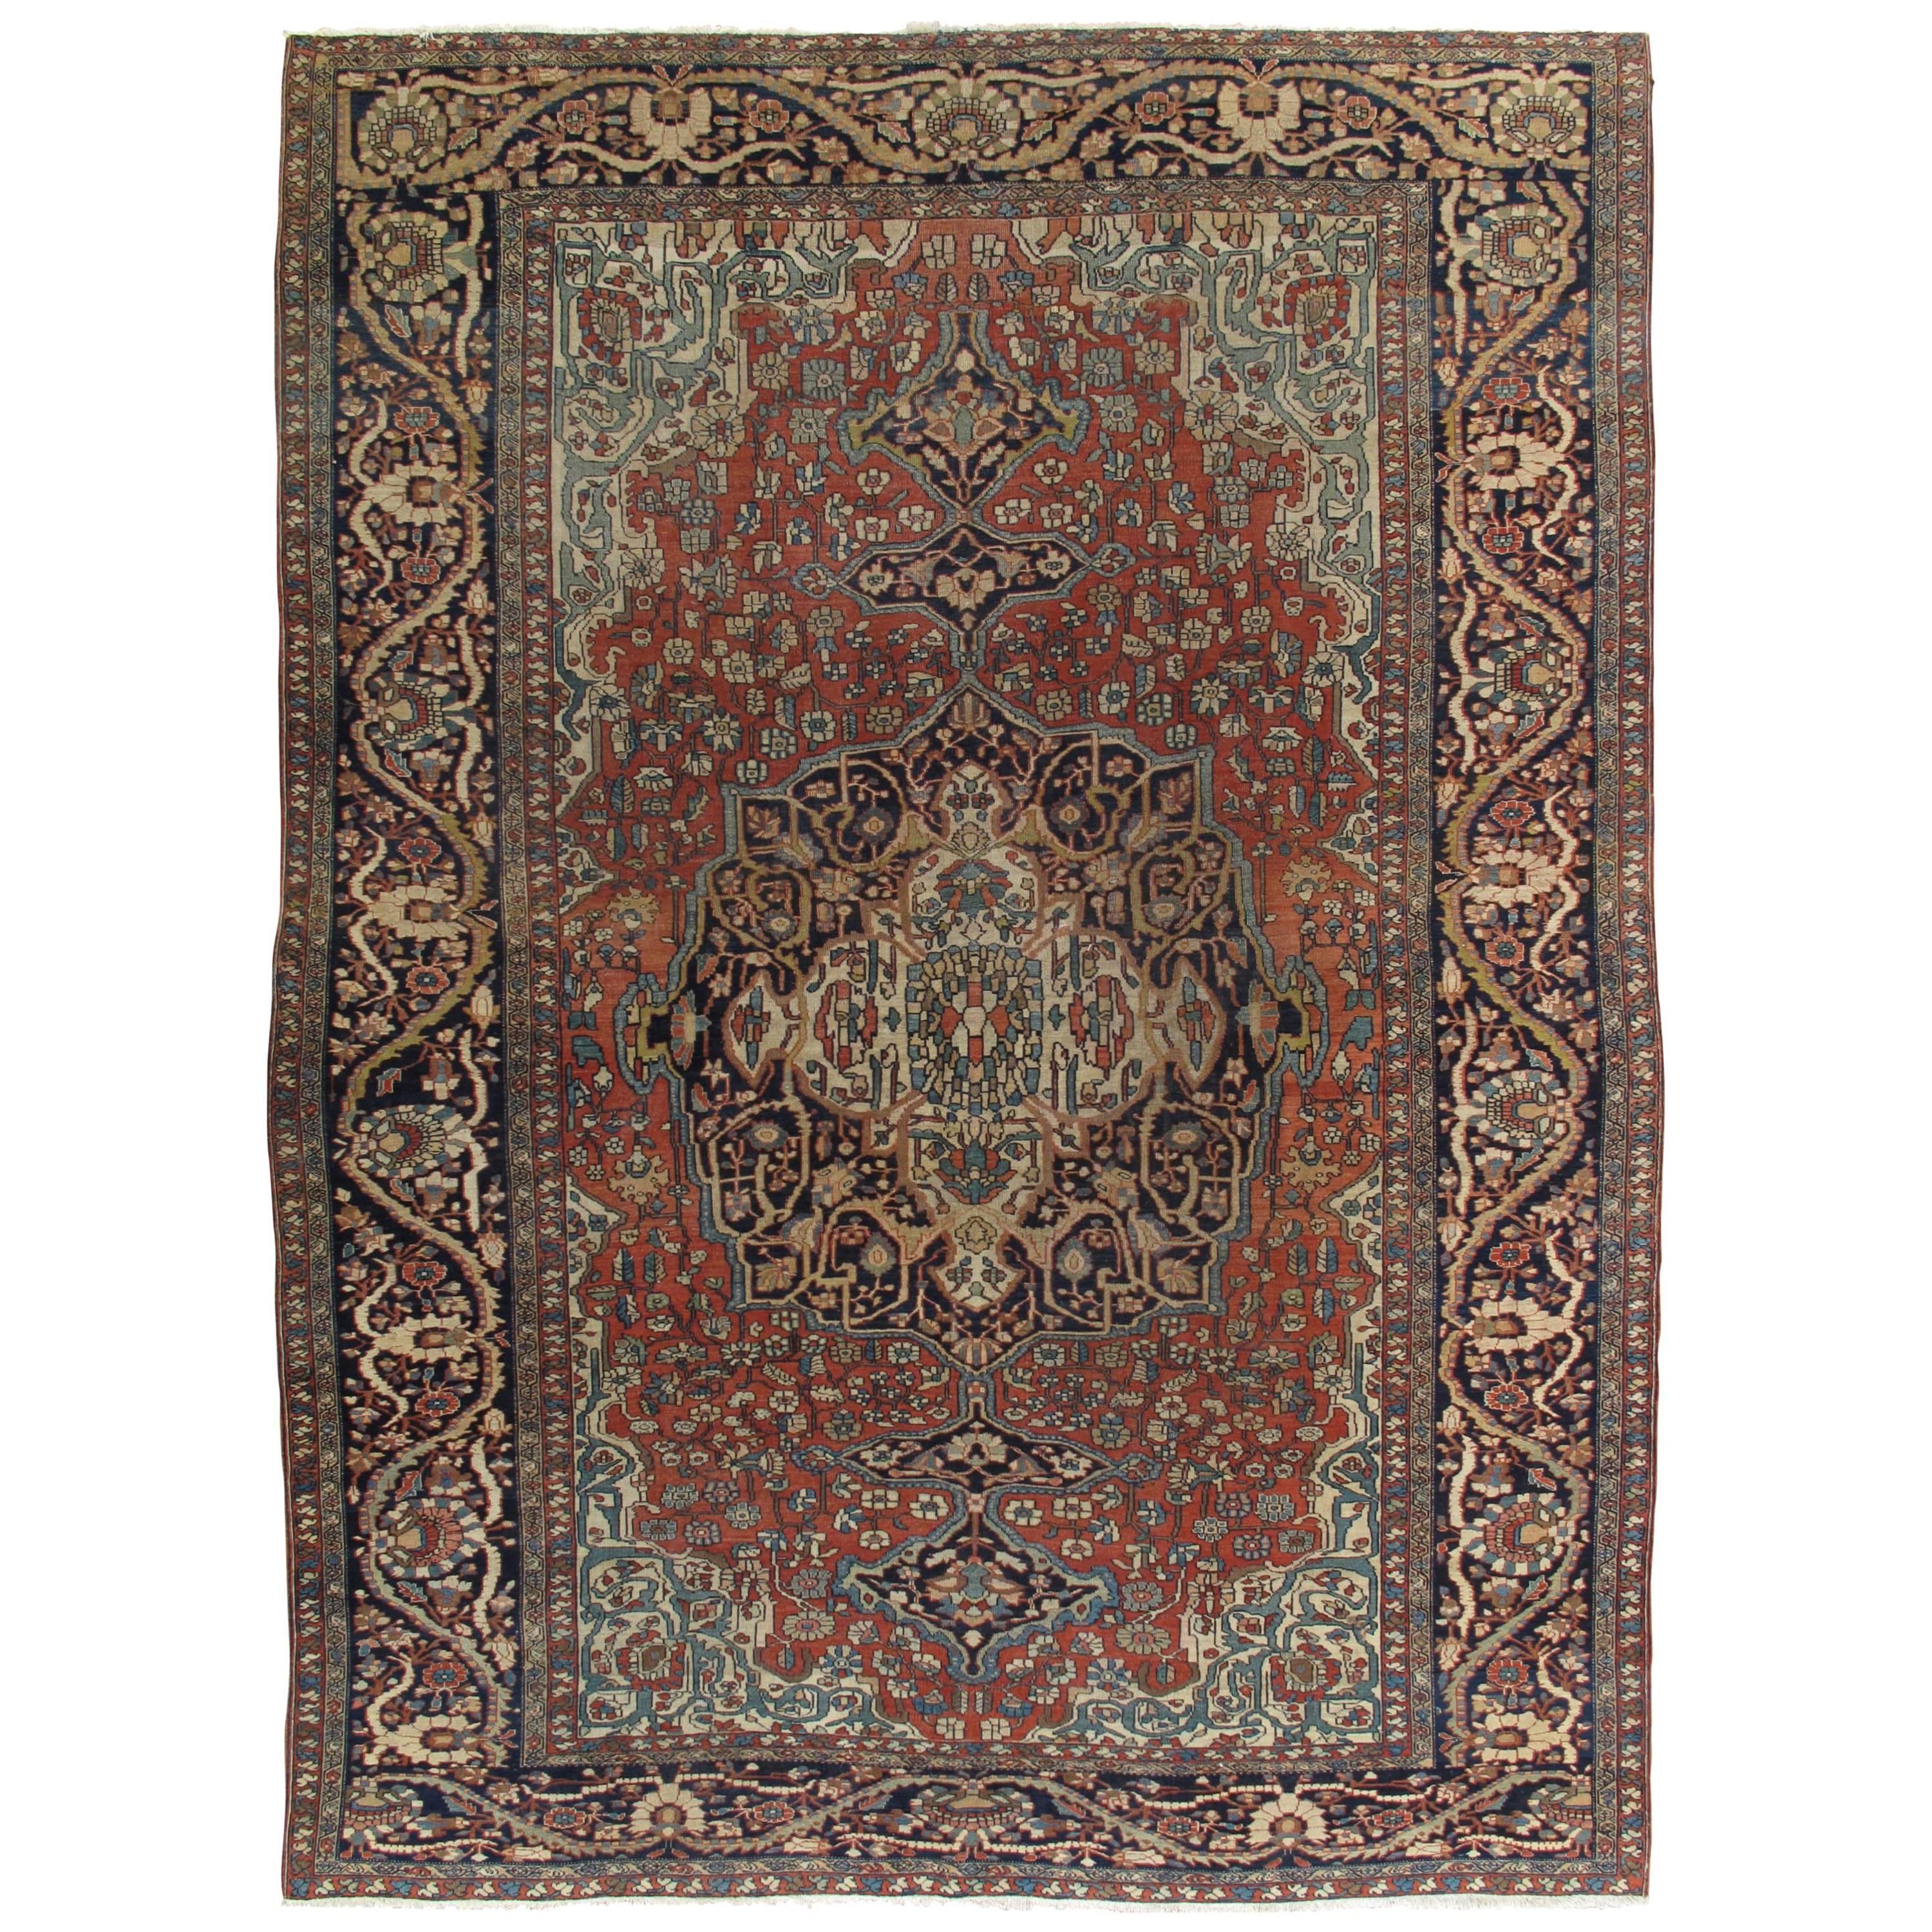 Antique Farahan Sarouk Carpet, Handmade Oriental Rug, Ivory, Navy, Green, Rust For Sale